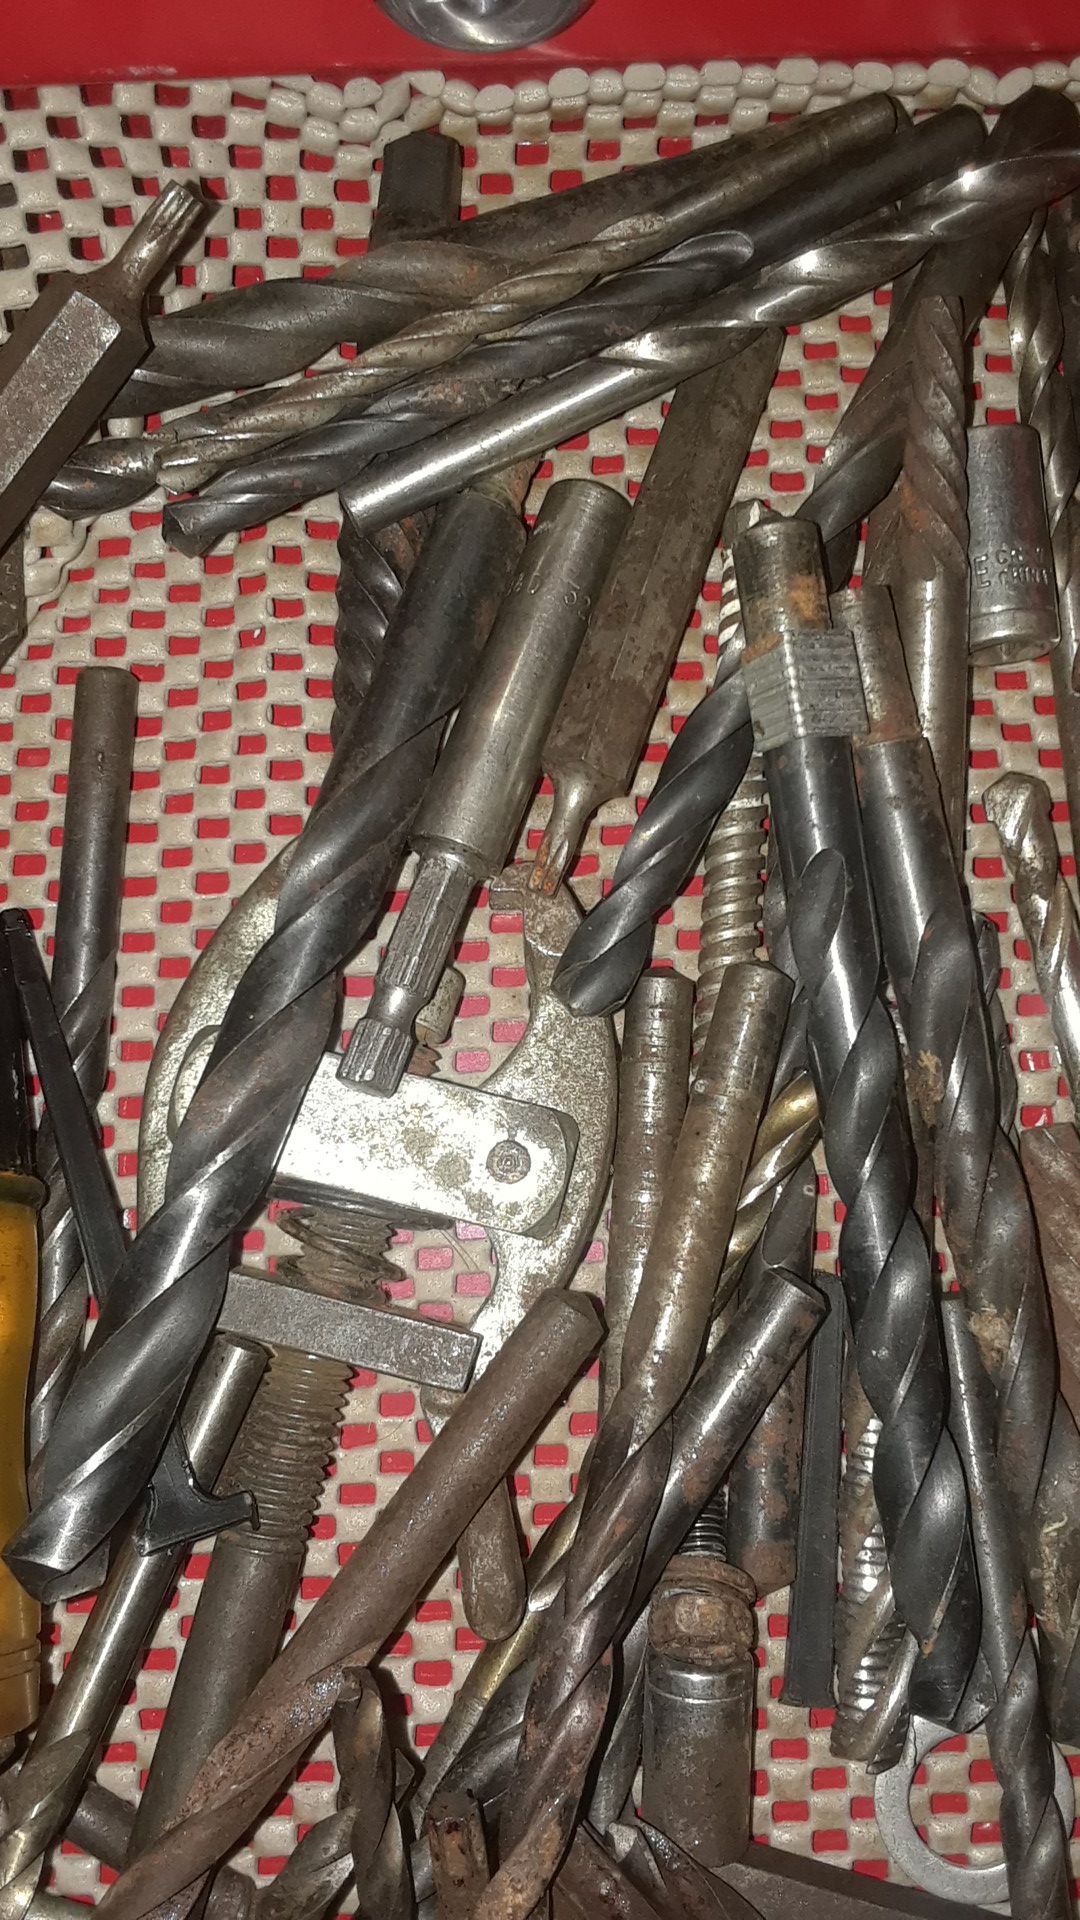 35 total Metal, wood, concrete assort drill bits